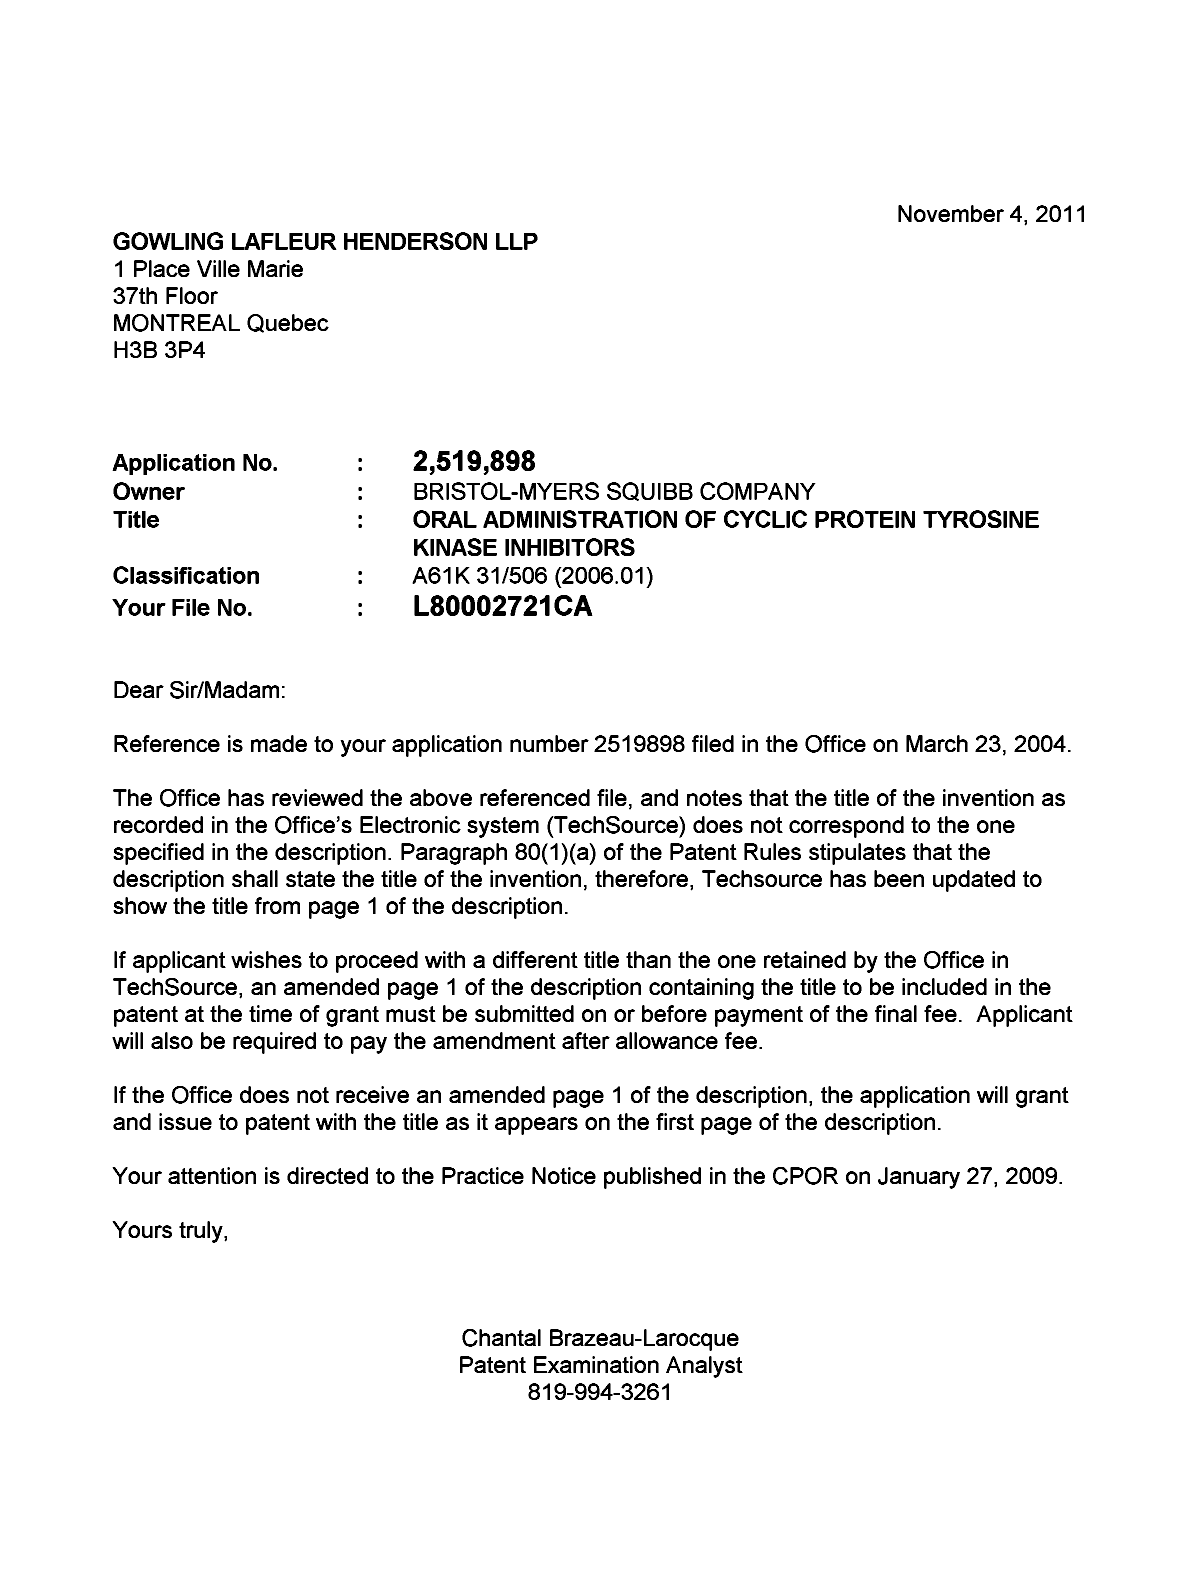 Canadian Patent Document 2519898. Correspondence 20101204. Image 1 of 1